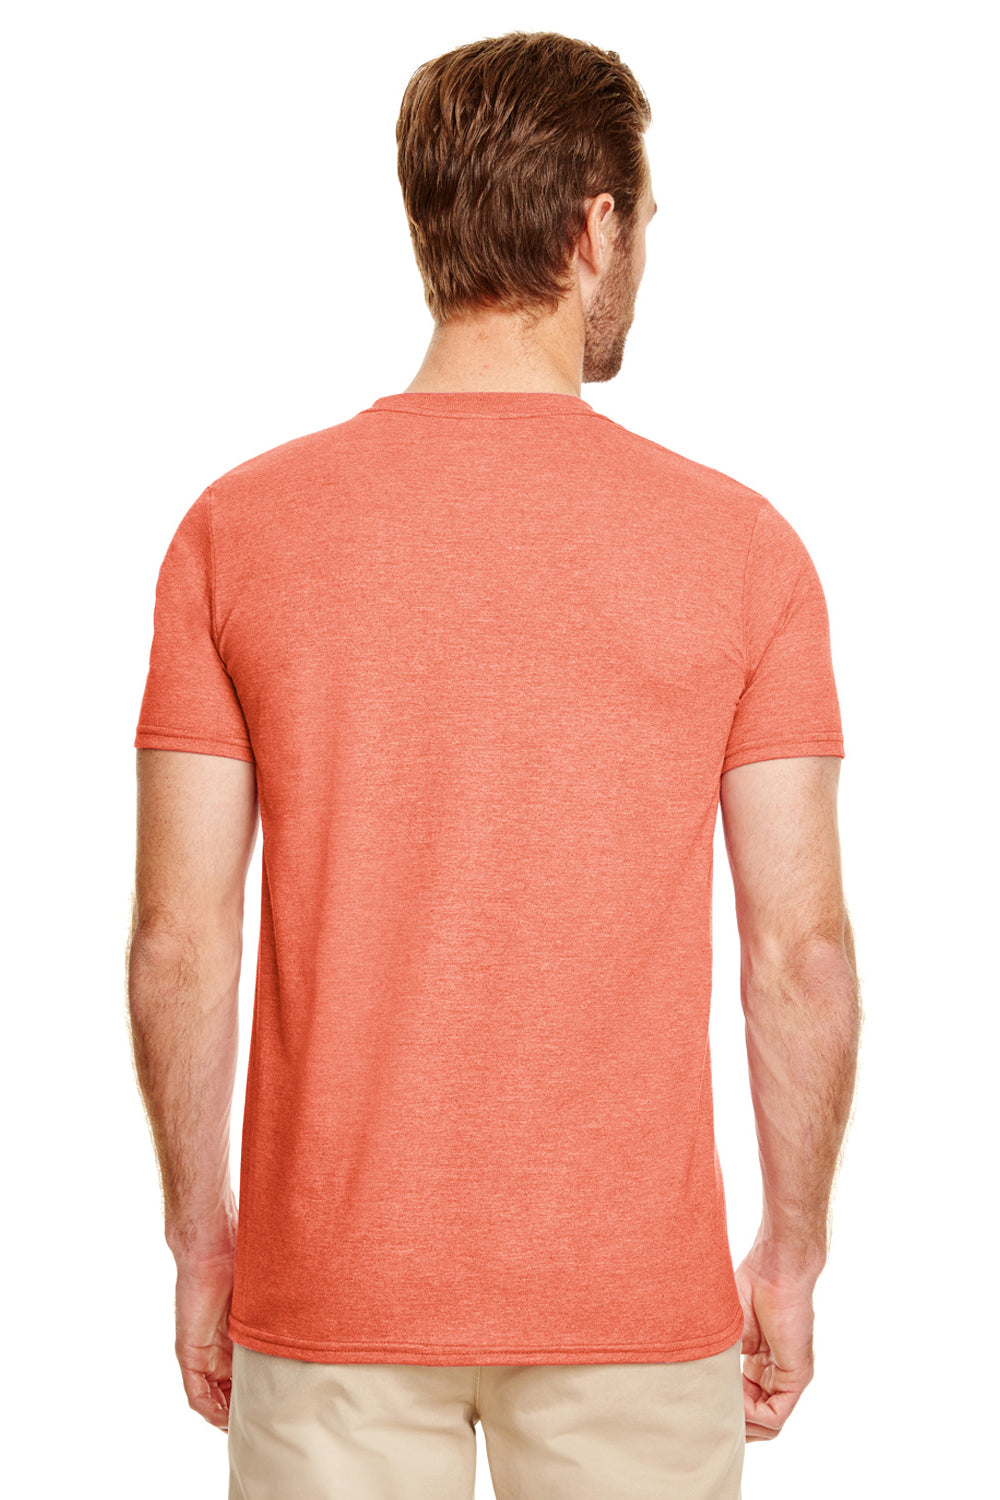 Gildan G640 Mens Softstyle Short Sleeve Crewneck T-Shirt Heather Orange Back